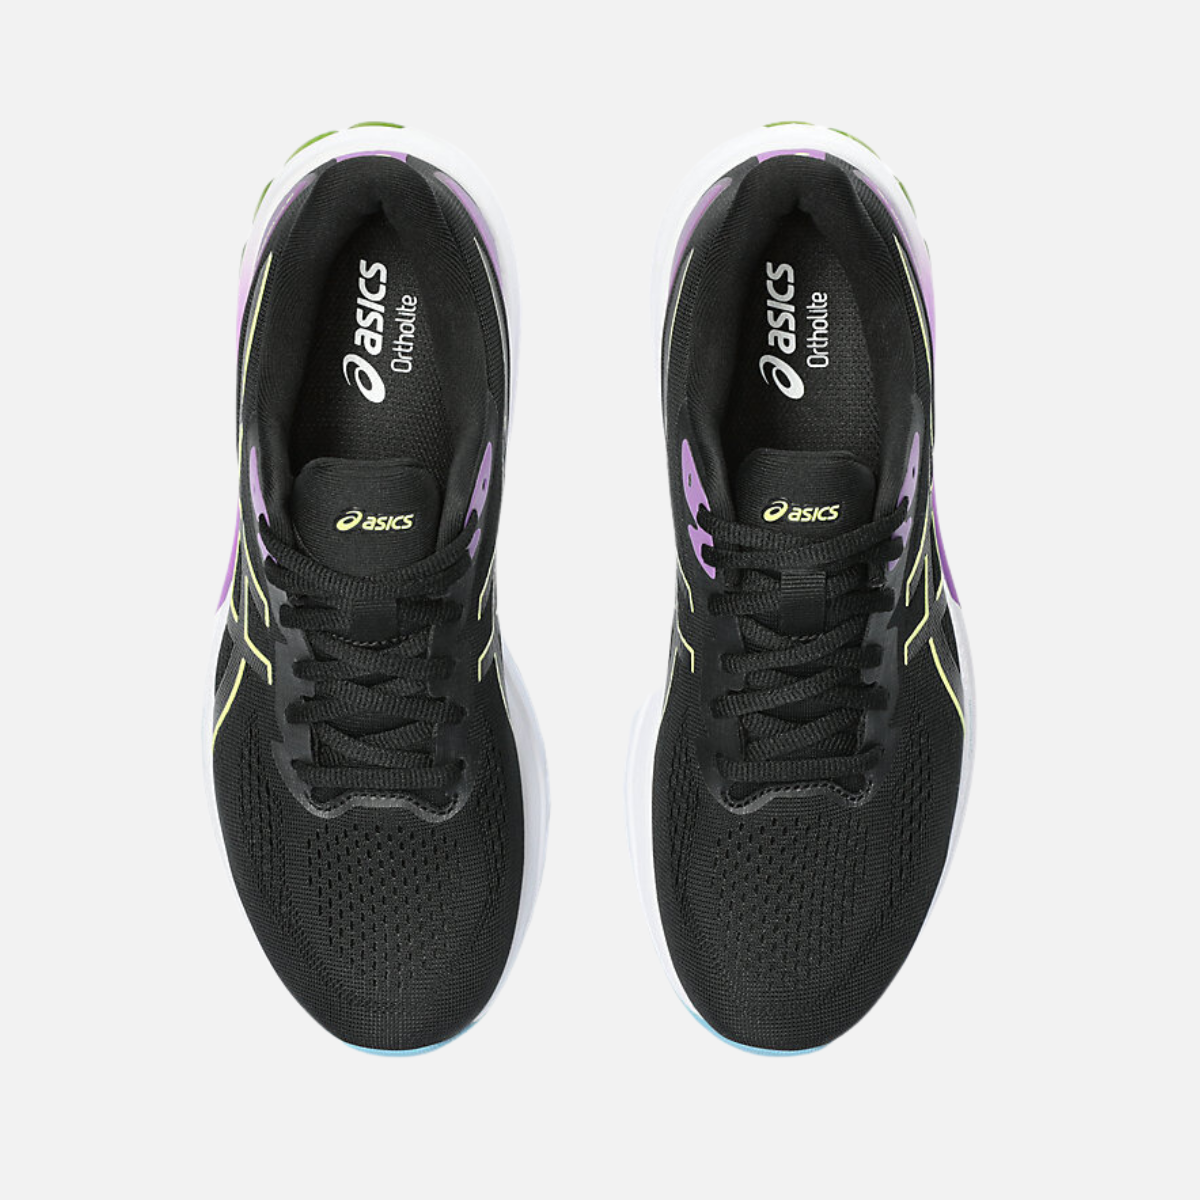 Asics GT-1000 12 Women's Running Shoes - Black/Glow Yellow